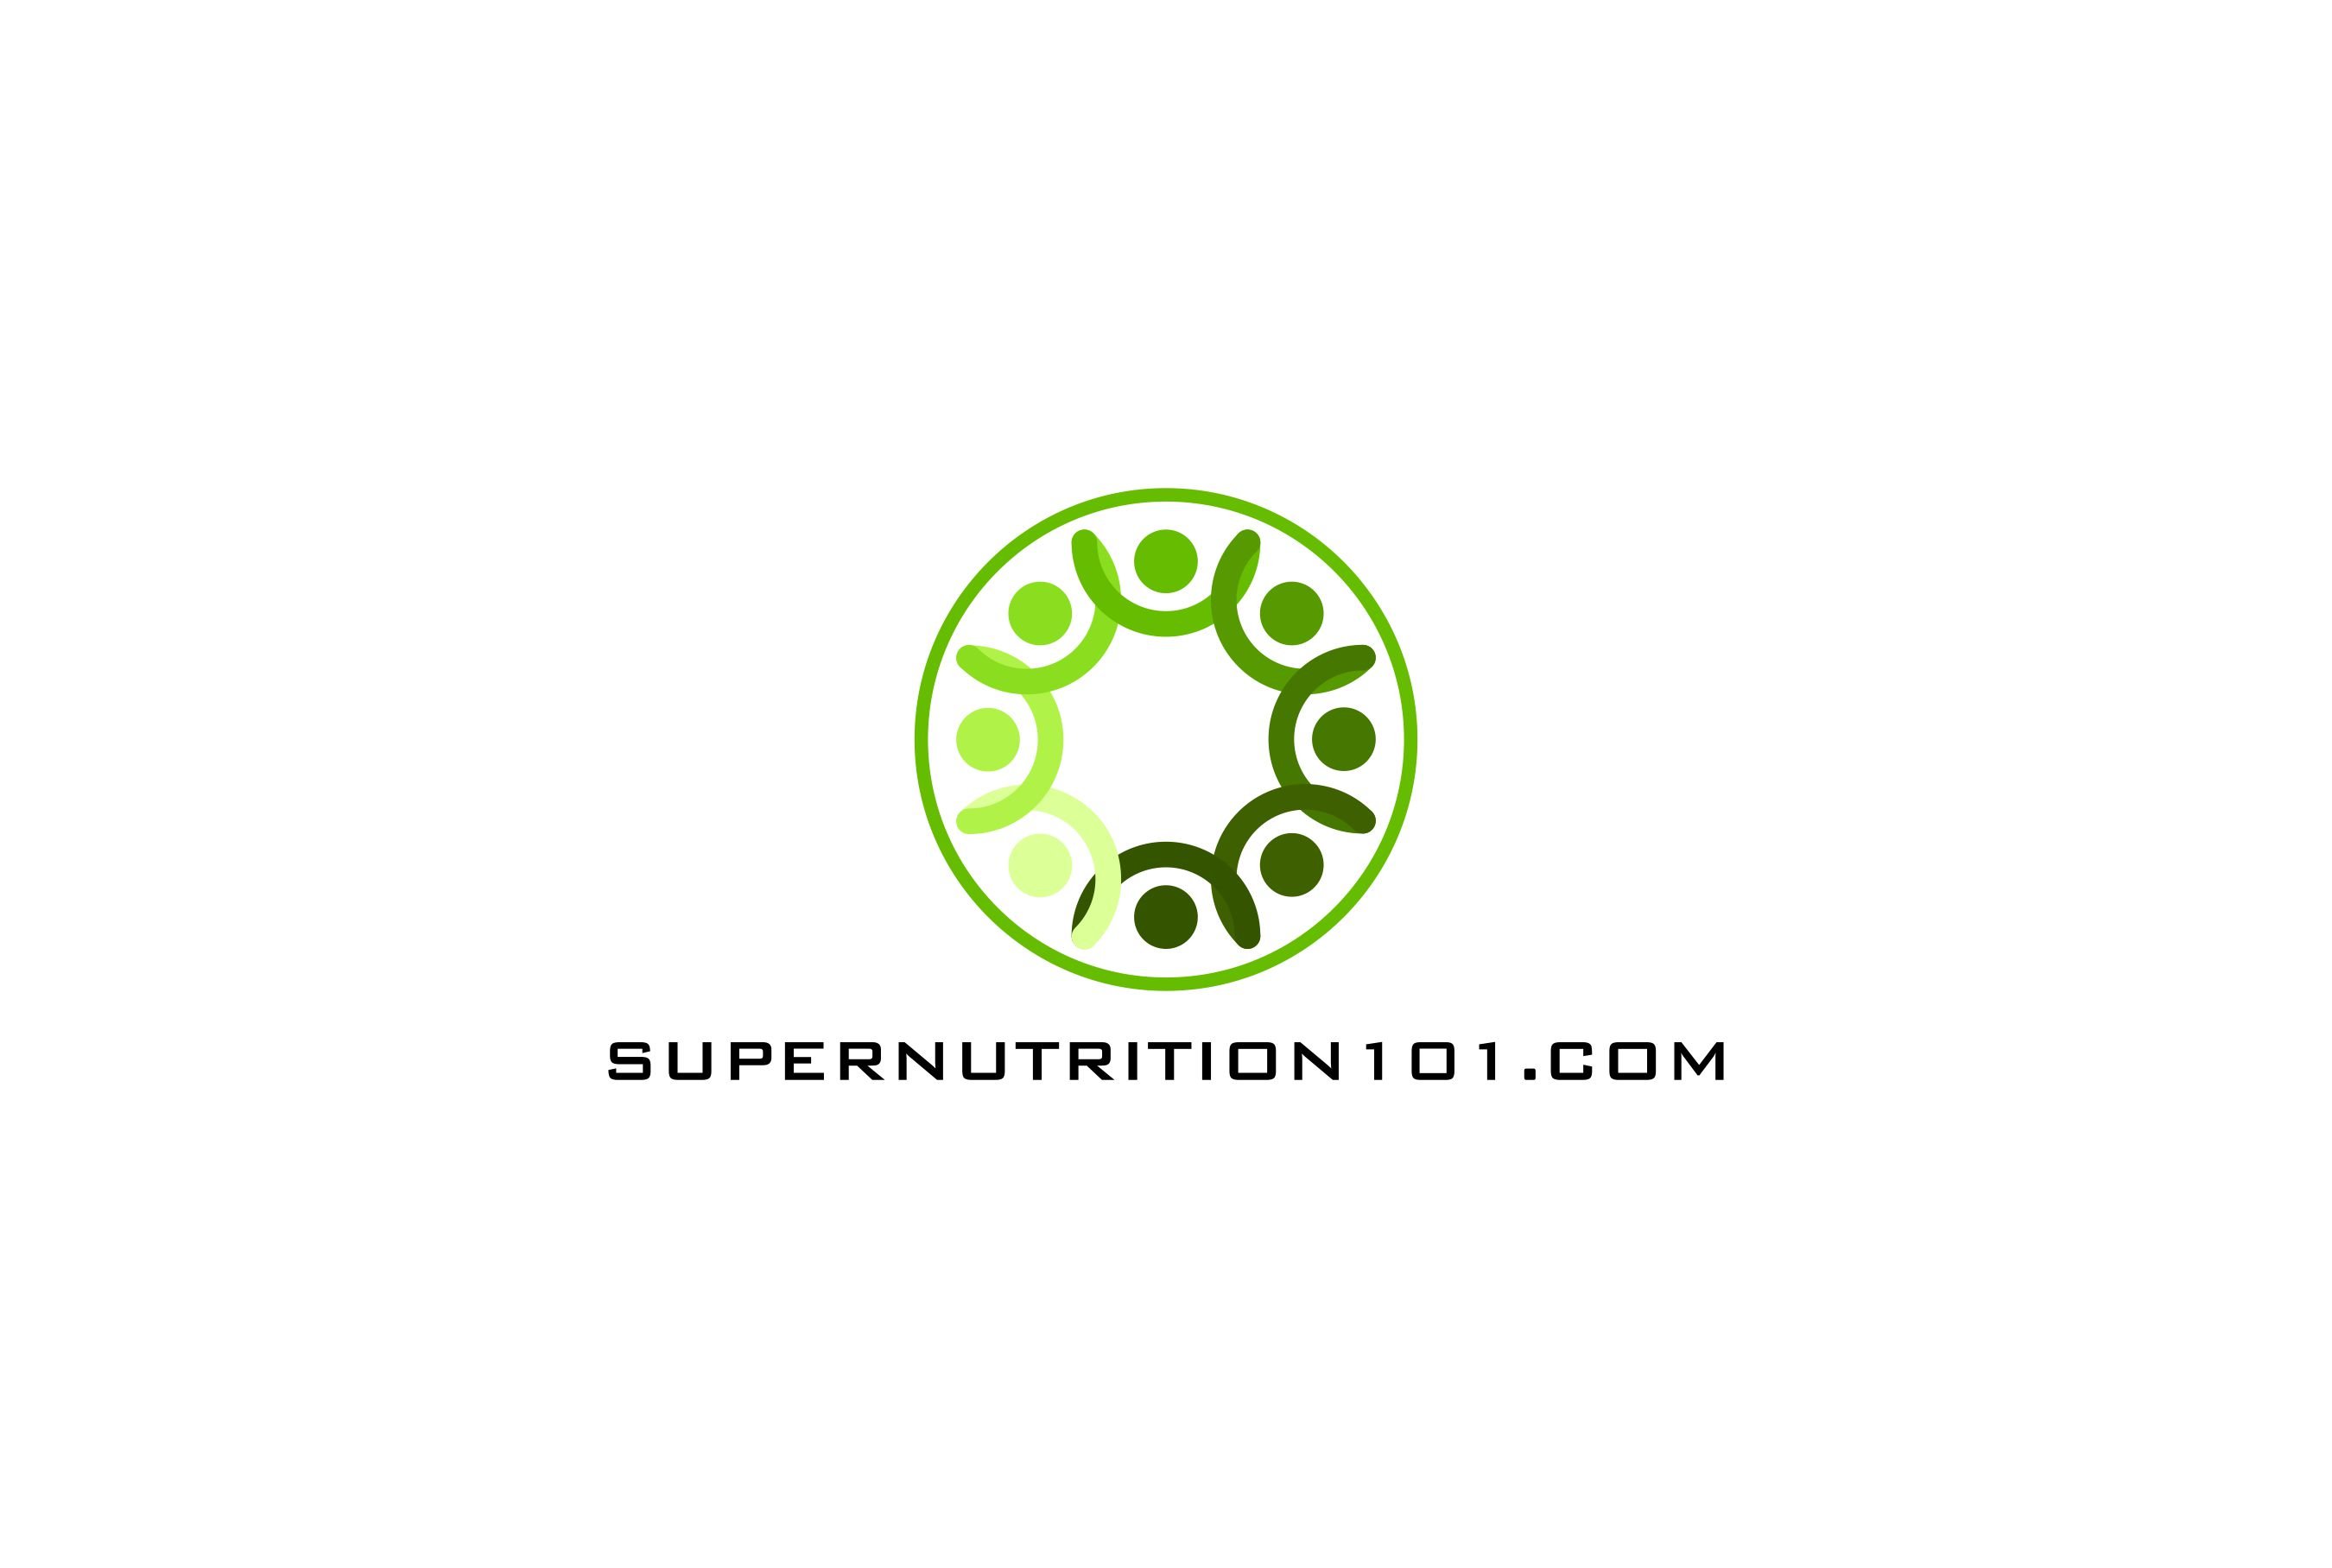 Supernutrition101